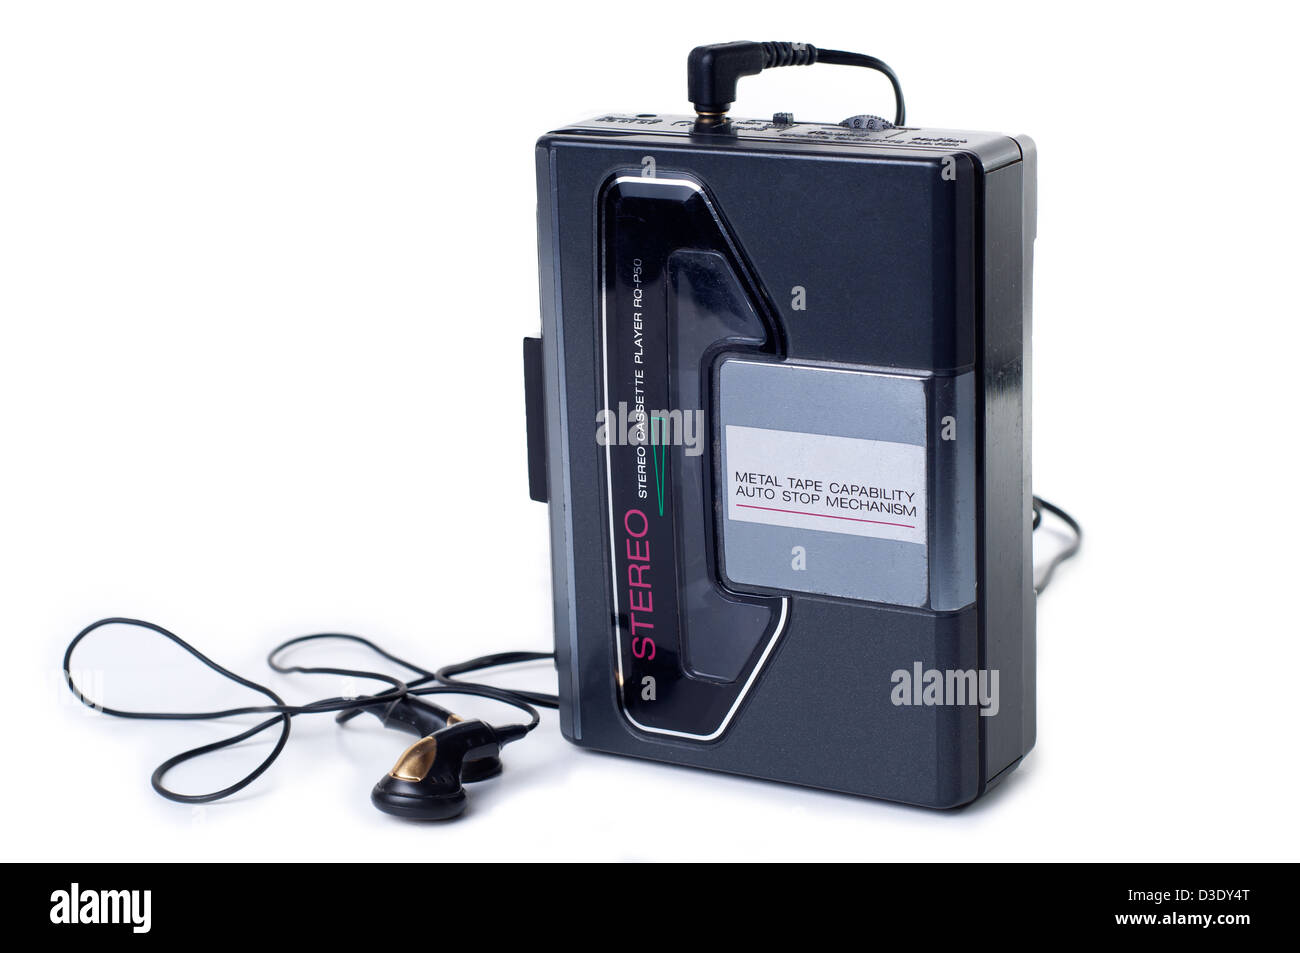 Portable cd player Imágenes recortadas de stock - Alamy